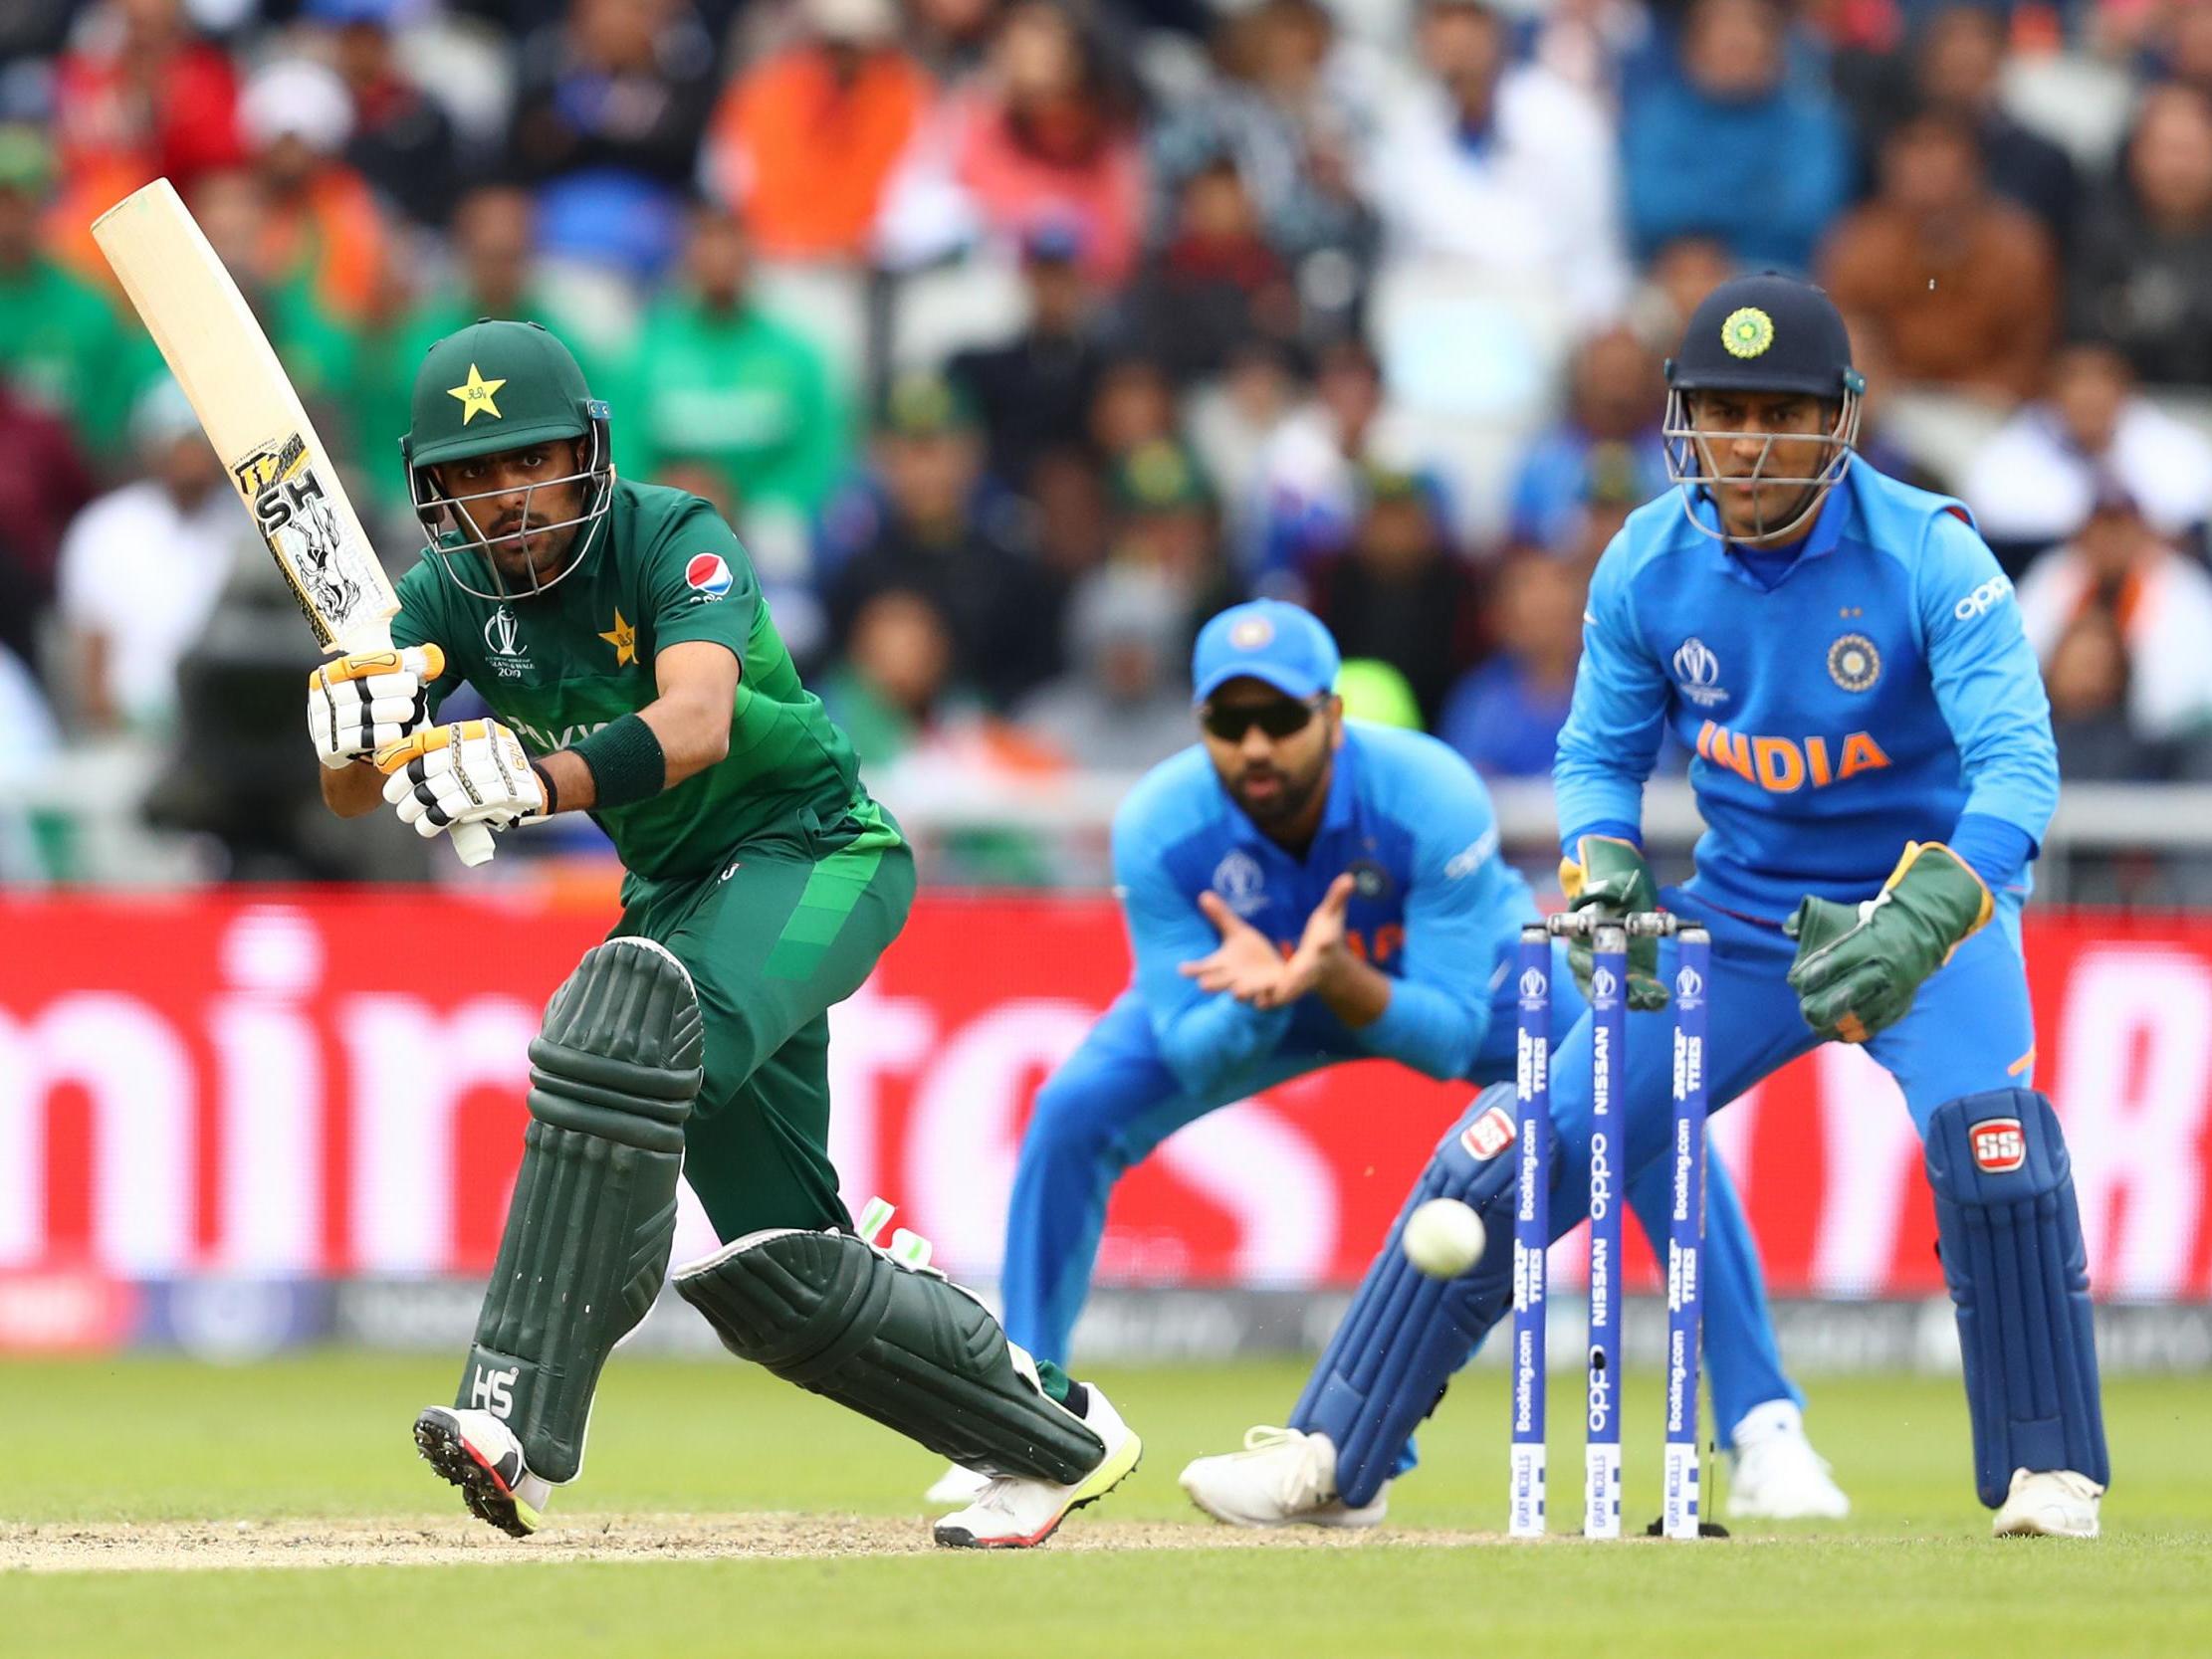 India Vs Pakistan Cricket World Cup 19 Live Scorecard And Updates As Sarfaraz Ahmed S Men Chase 336